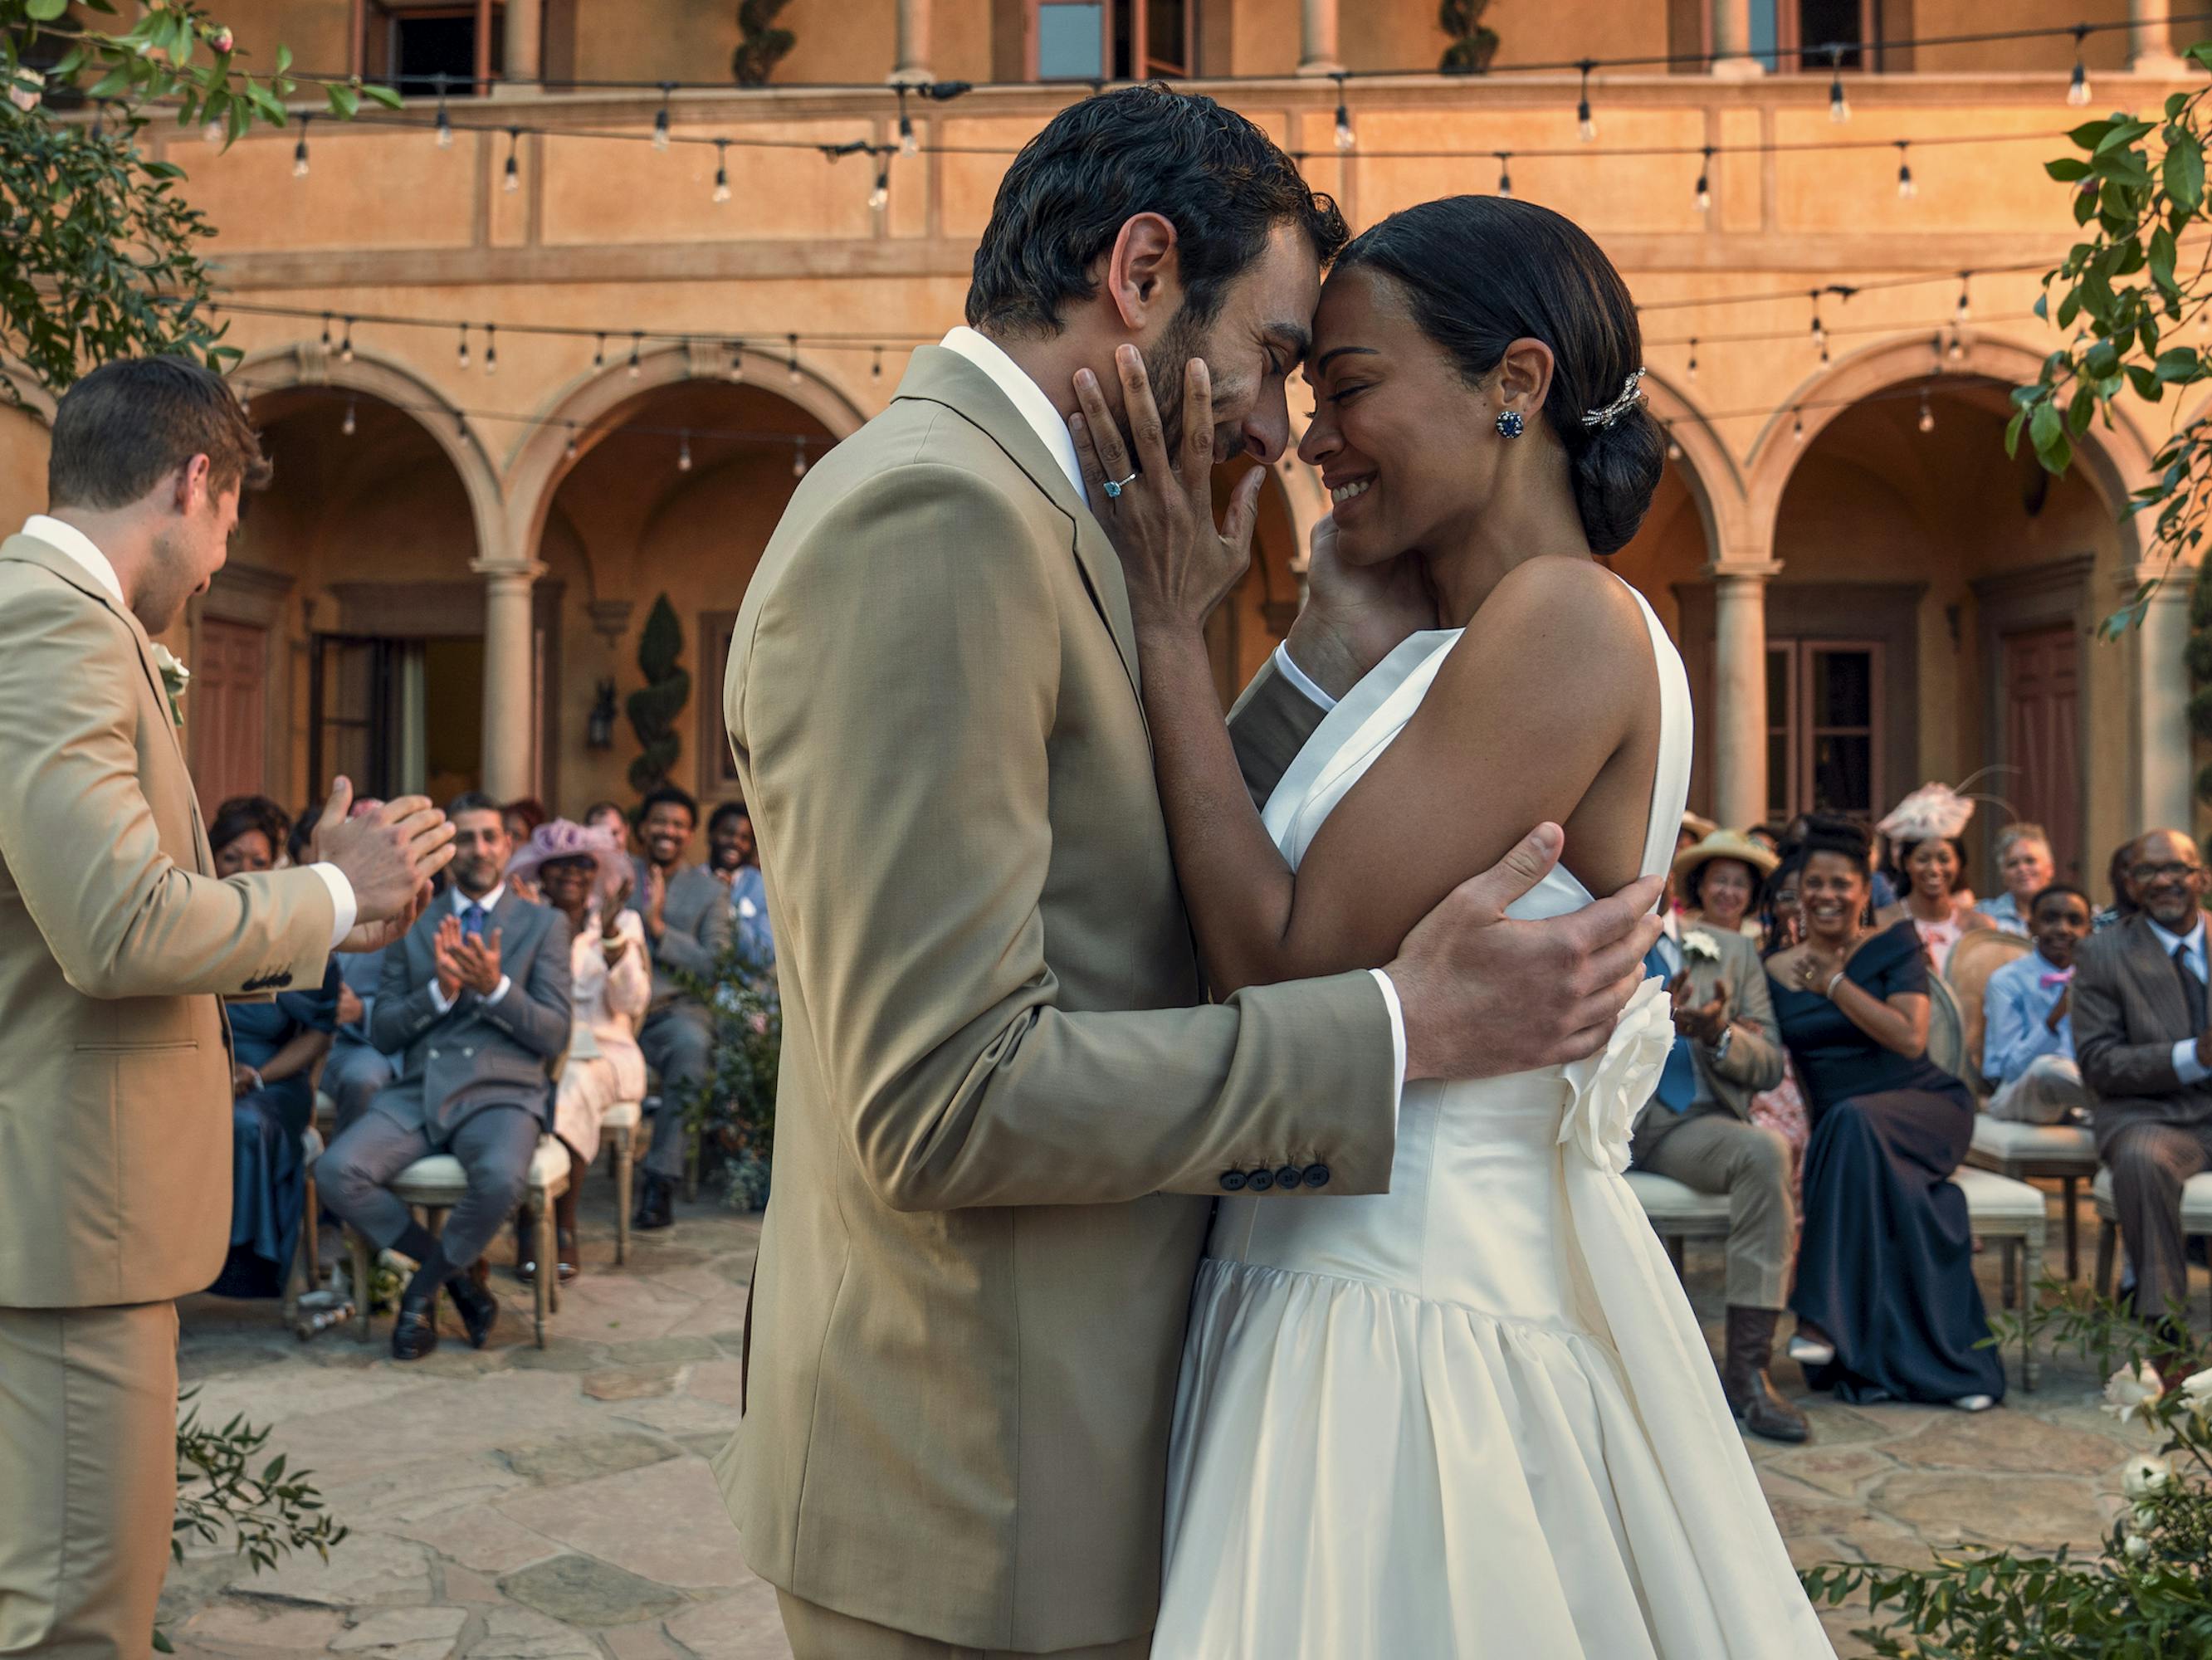 Amy Wheeler (Zoe Saldana) and Lino Ortolano (Eugenio Mastrandrea) dance together at their wedding.